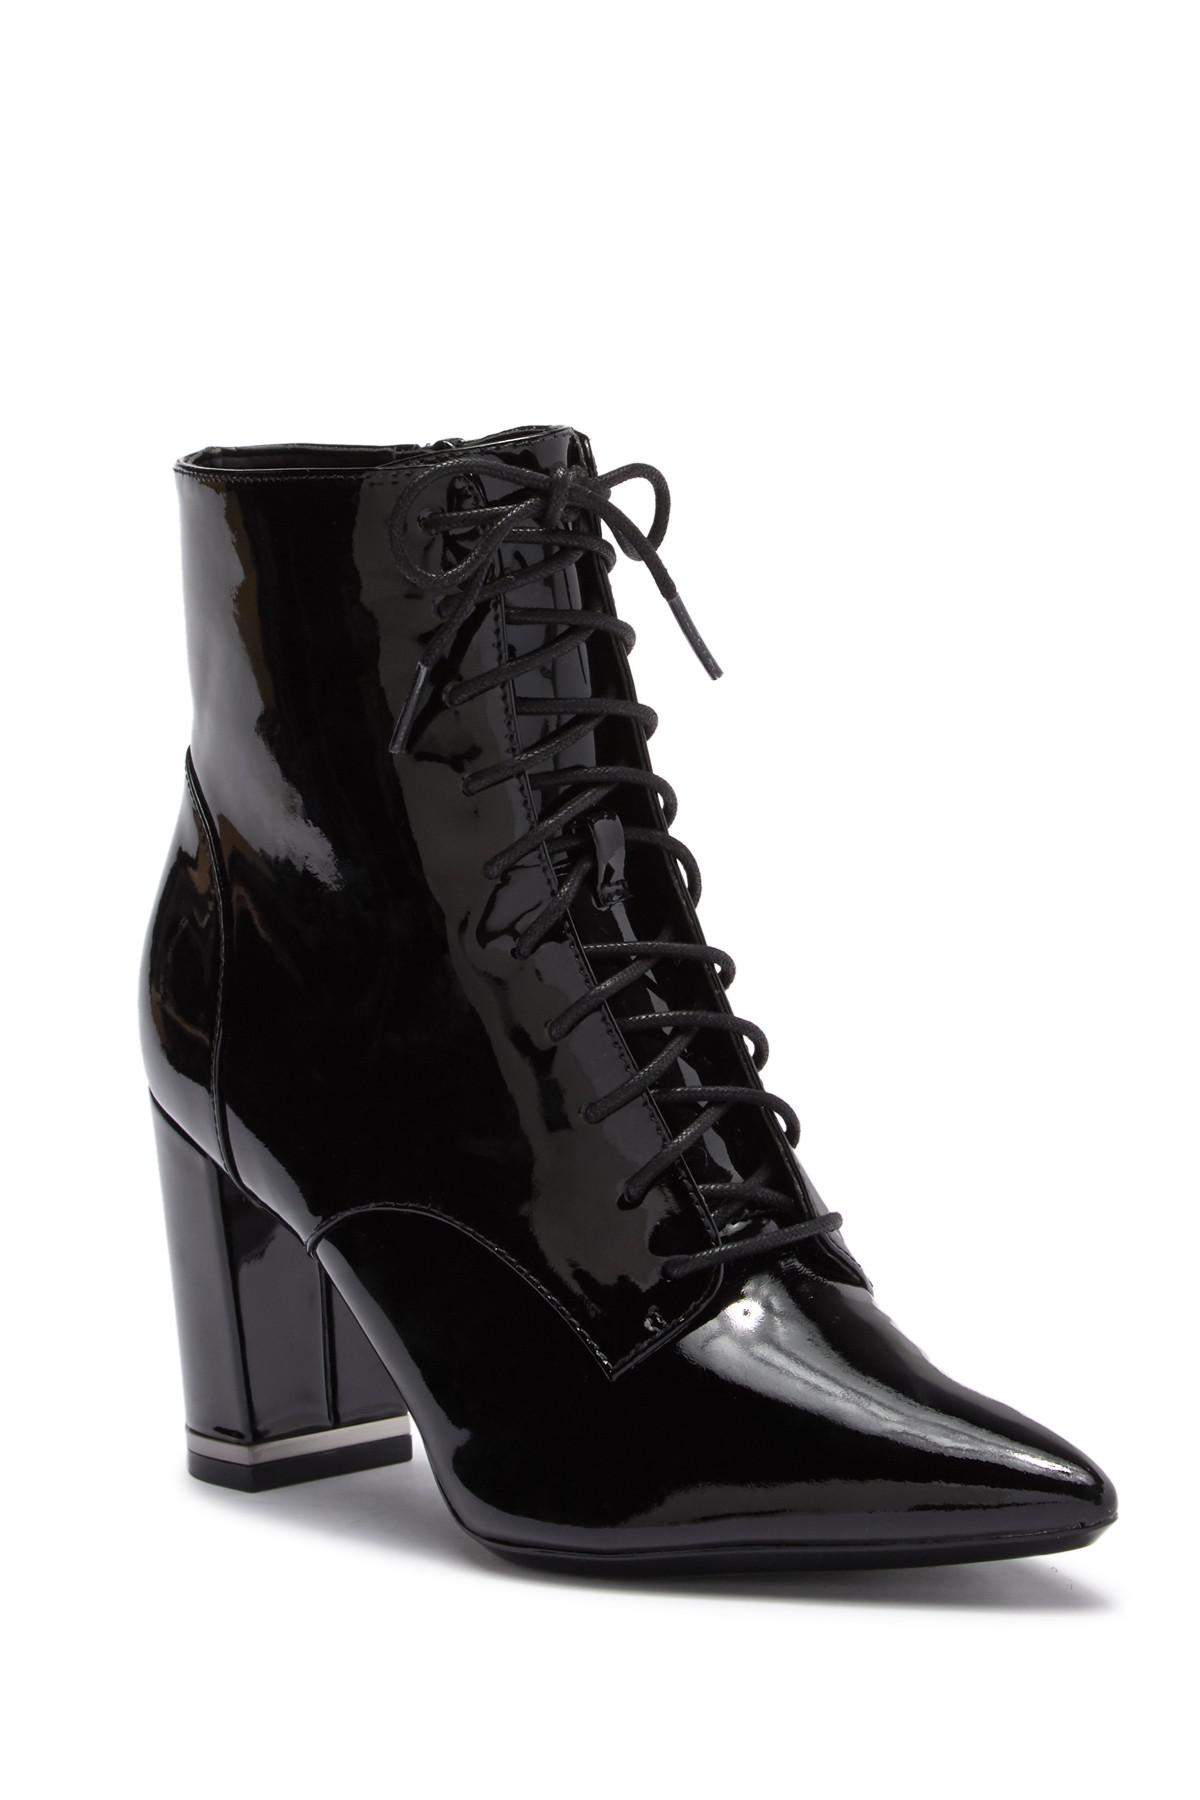 Calvin Klein Esma Ankle Boot in Black 